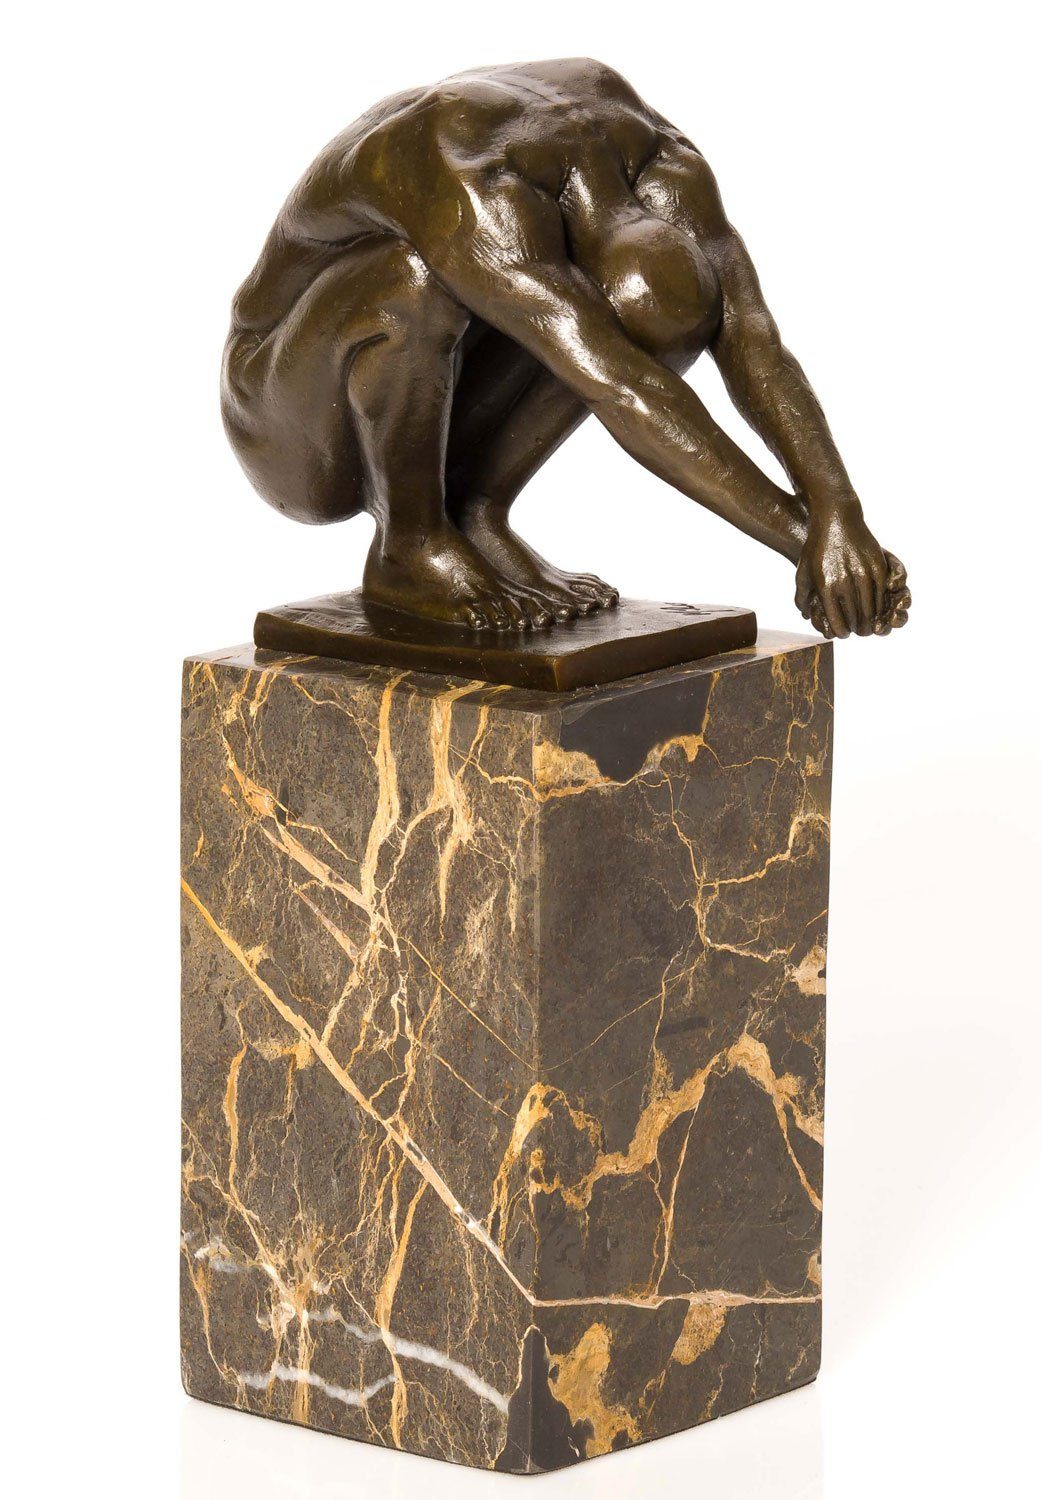 Aubaho Skulptur Bronze Schwimmer Turmspringer Figur Skulptur Erotik antik Skulptur Akt